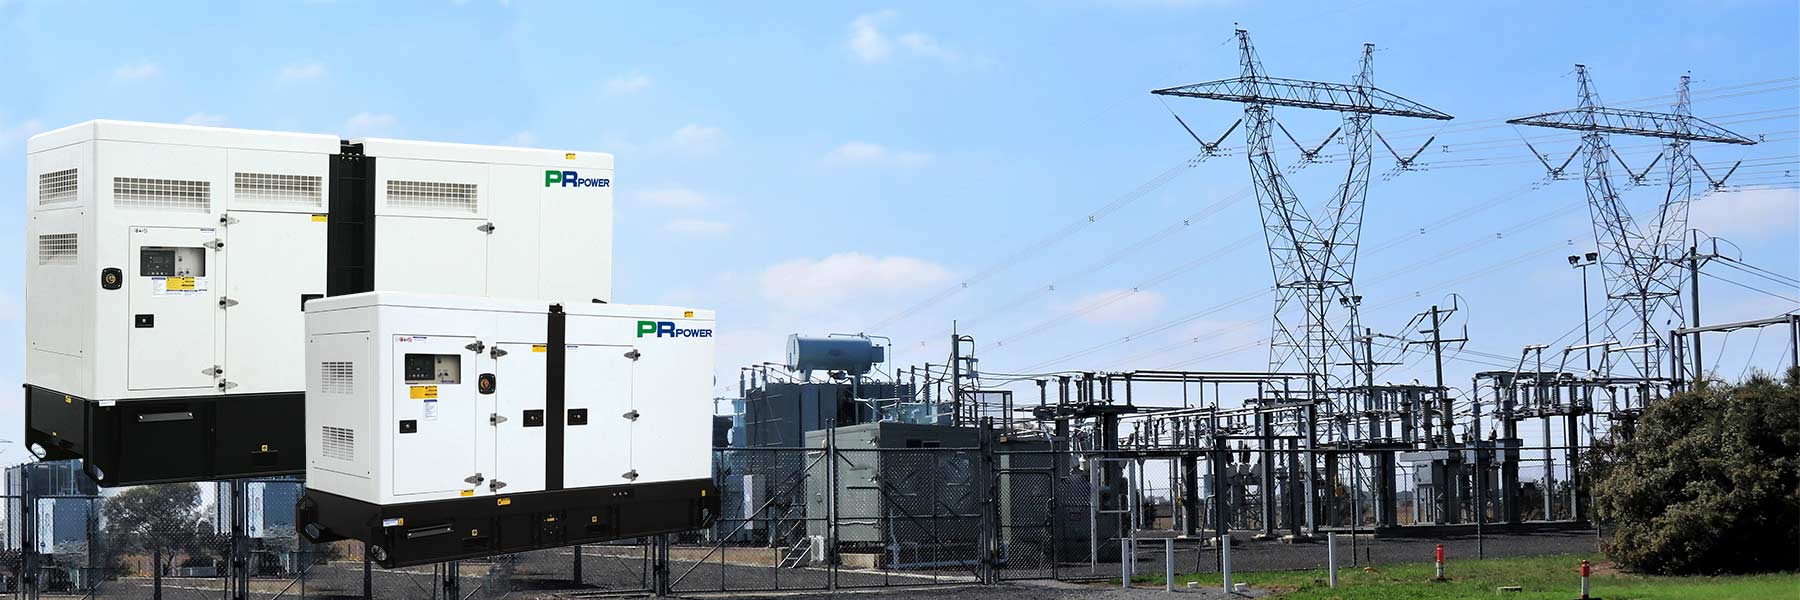 Embedded into the grid Diesel Generators PR Power Australia